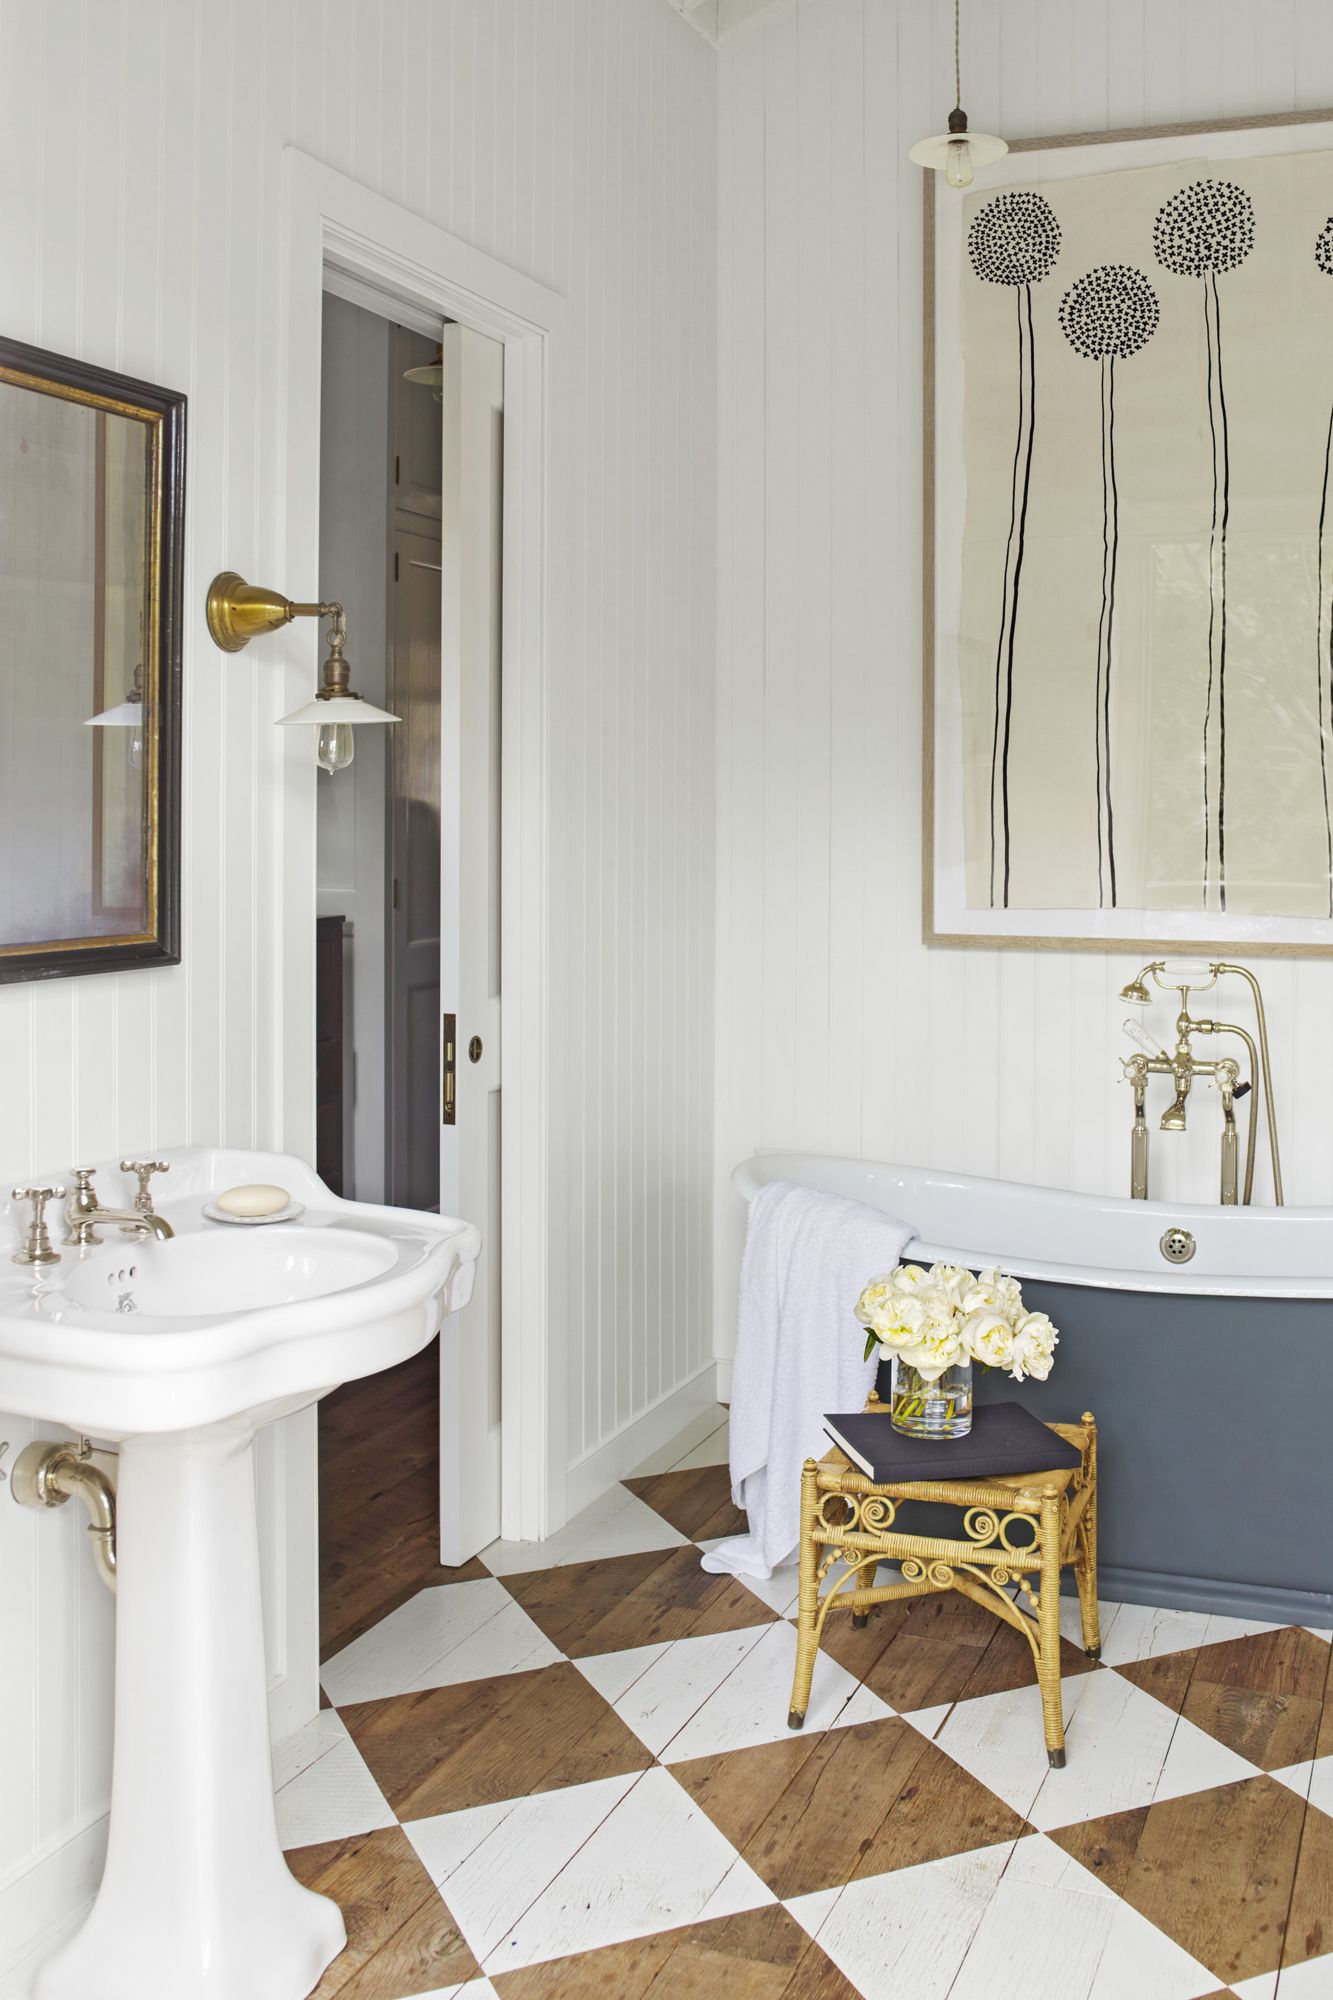 37 Best Bathroom Tile Ideas Beautiful Floor And Wall Tile Designs For Bathrooms,Pantone Color Palette Maker